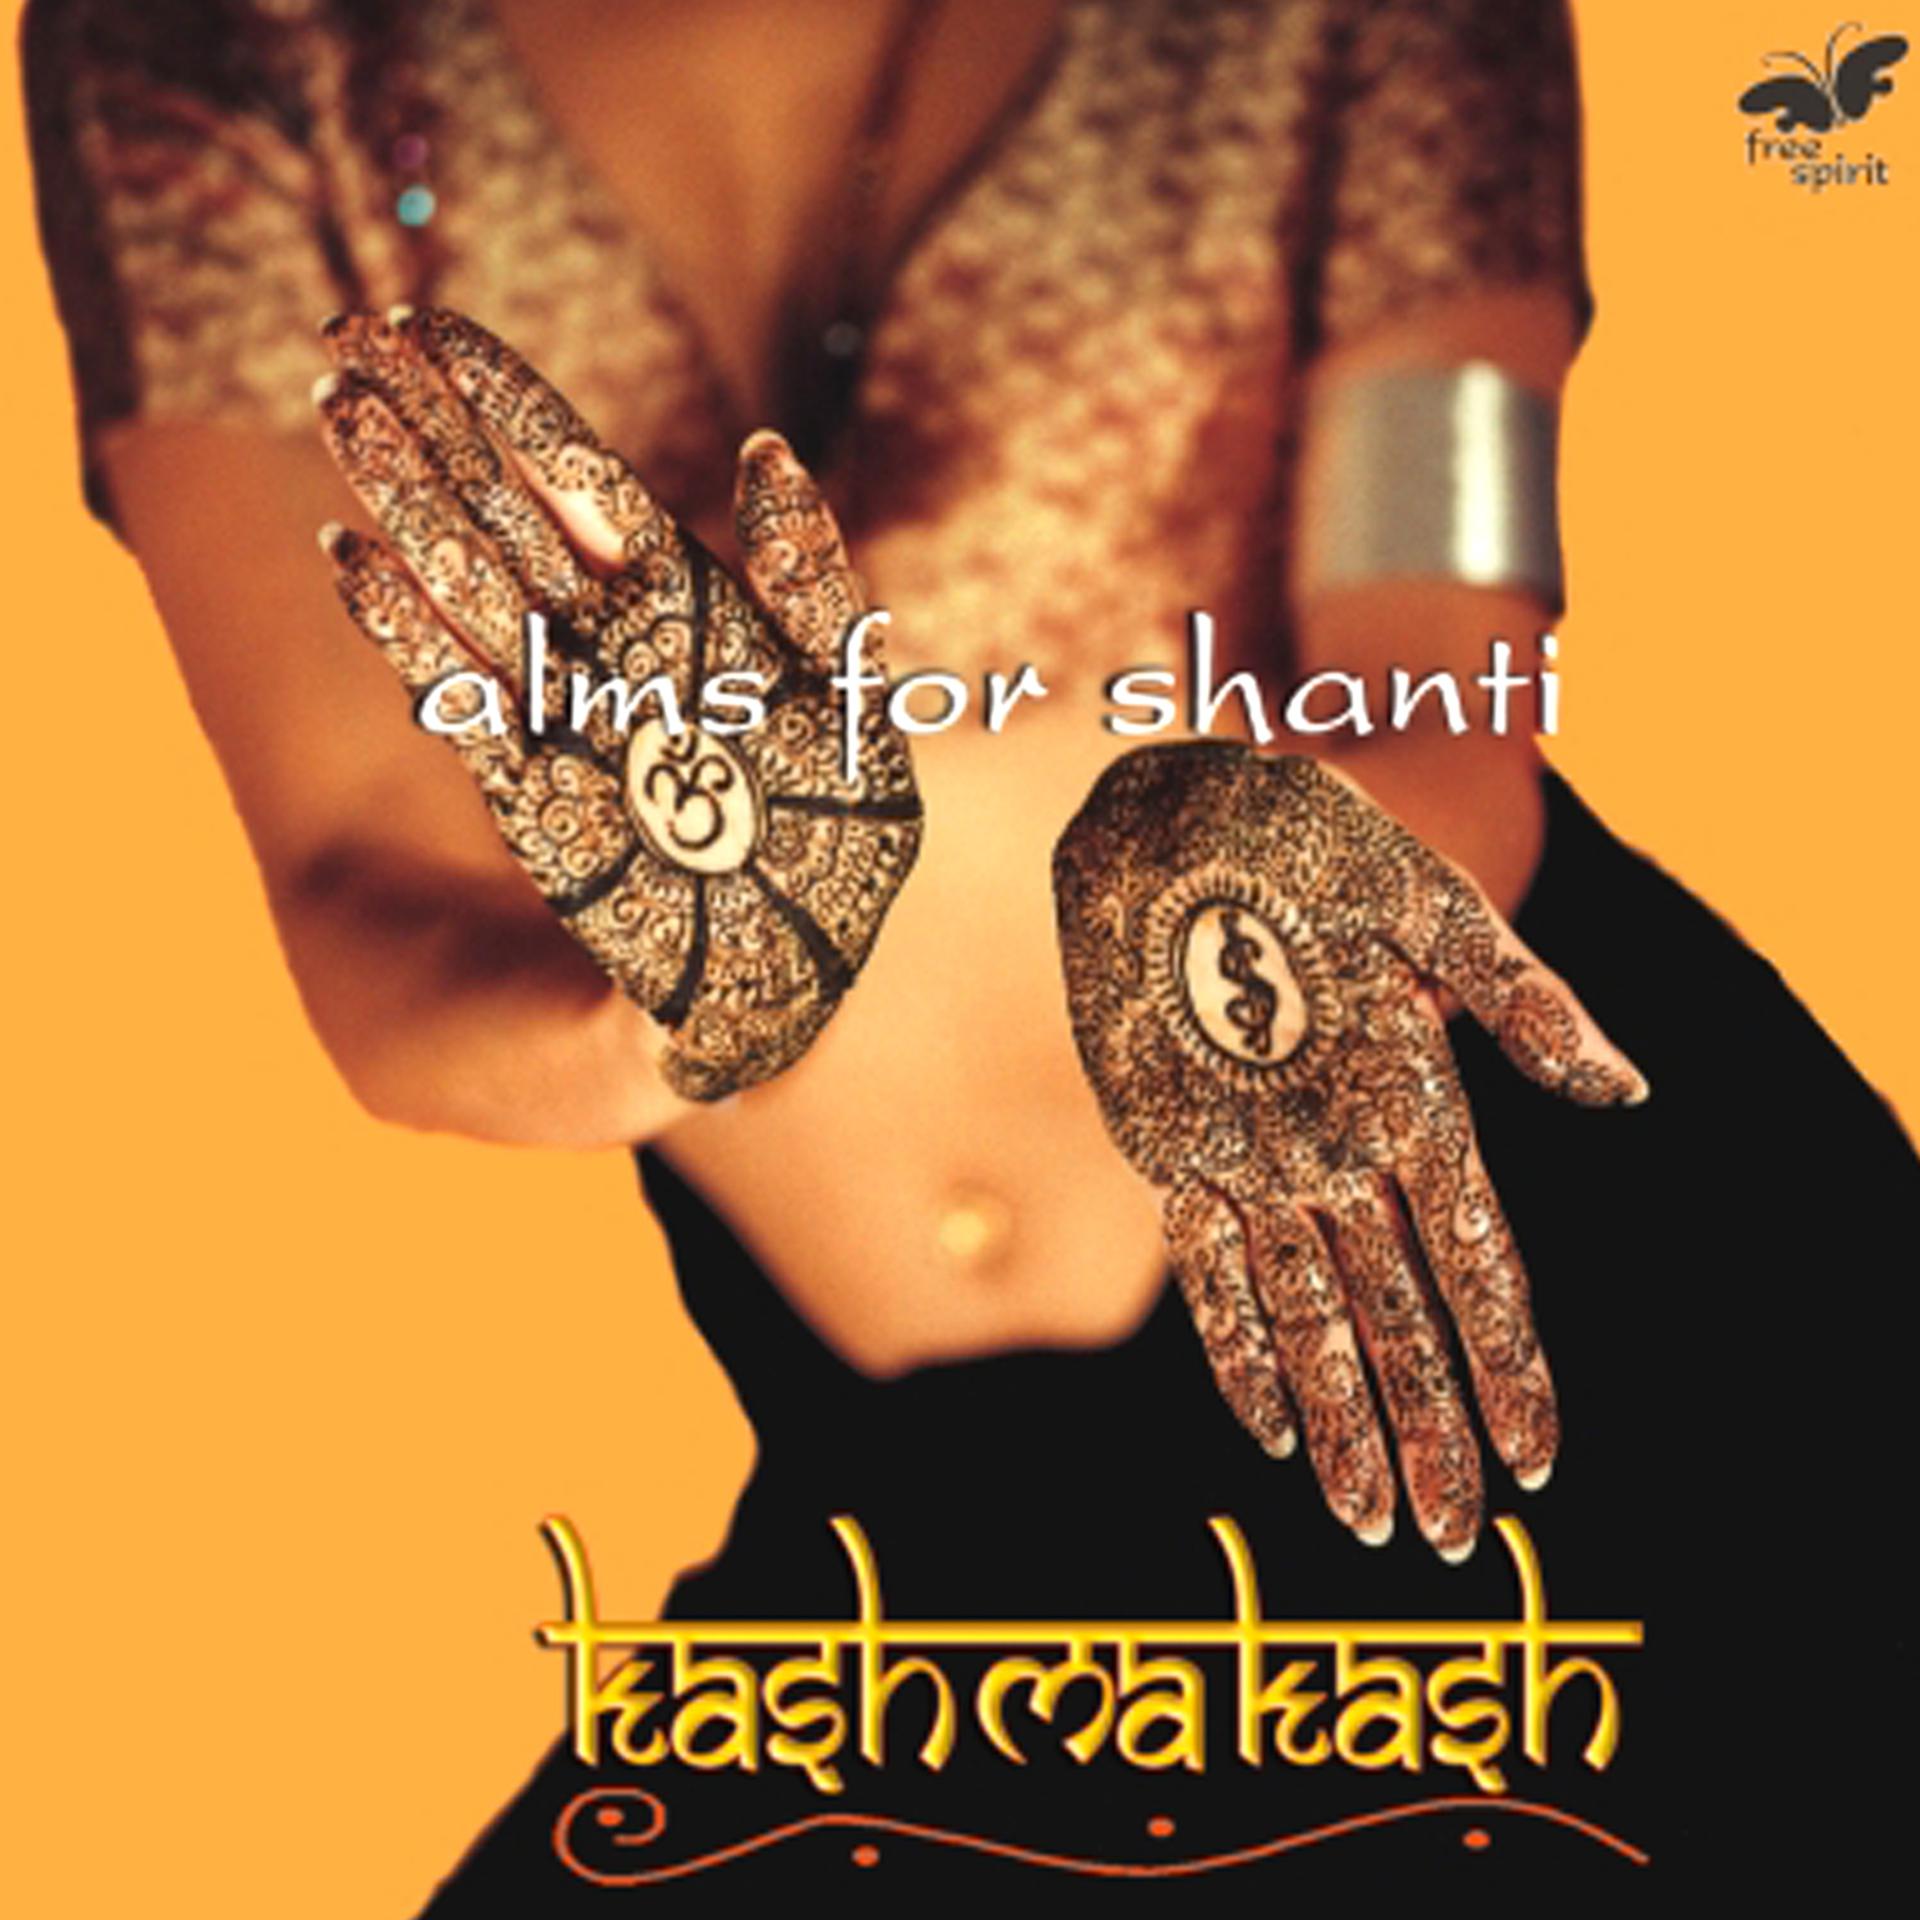 Постер альбома Kashmakash